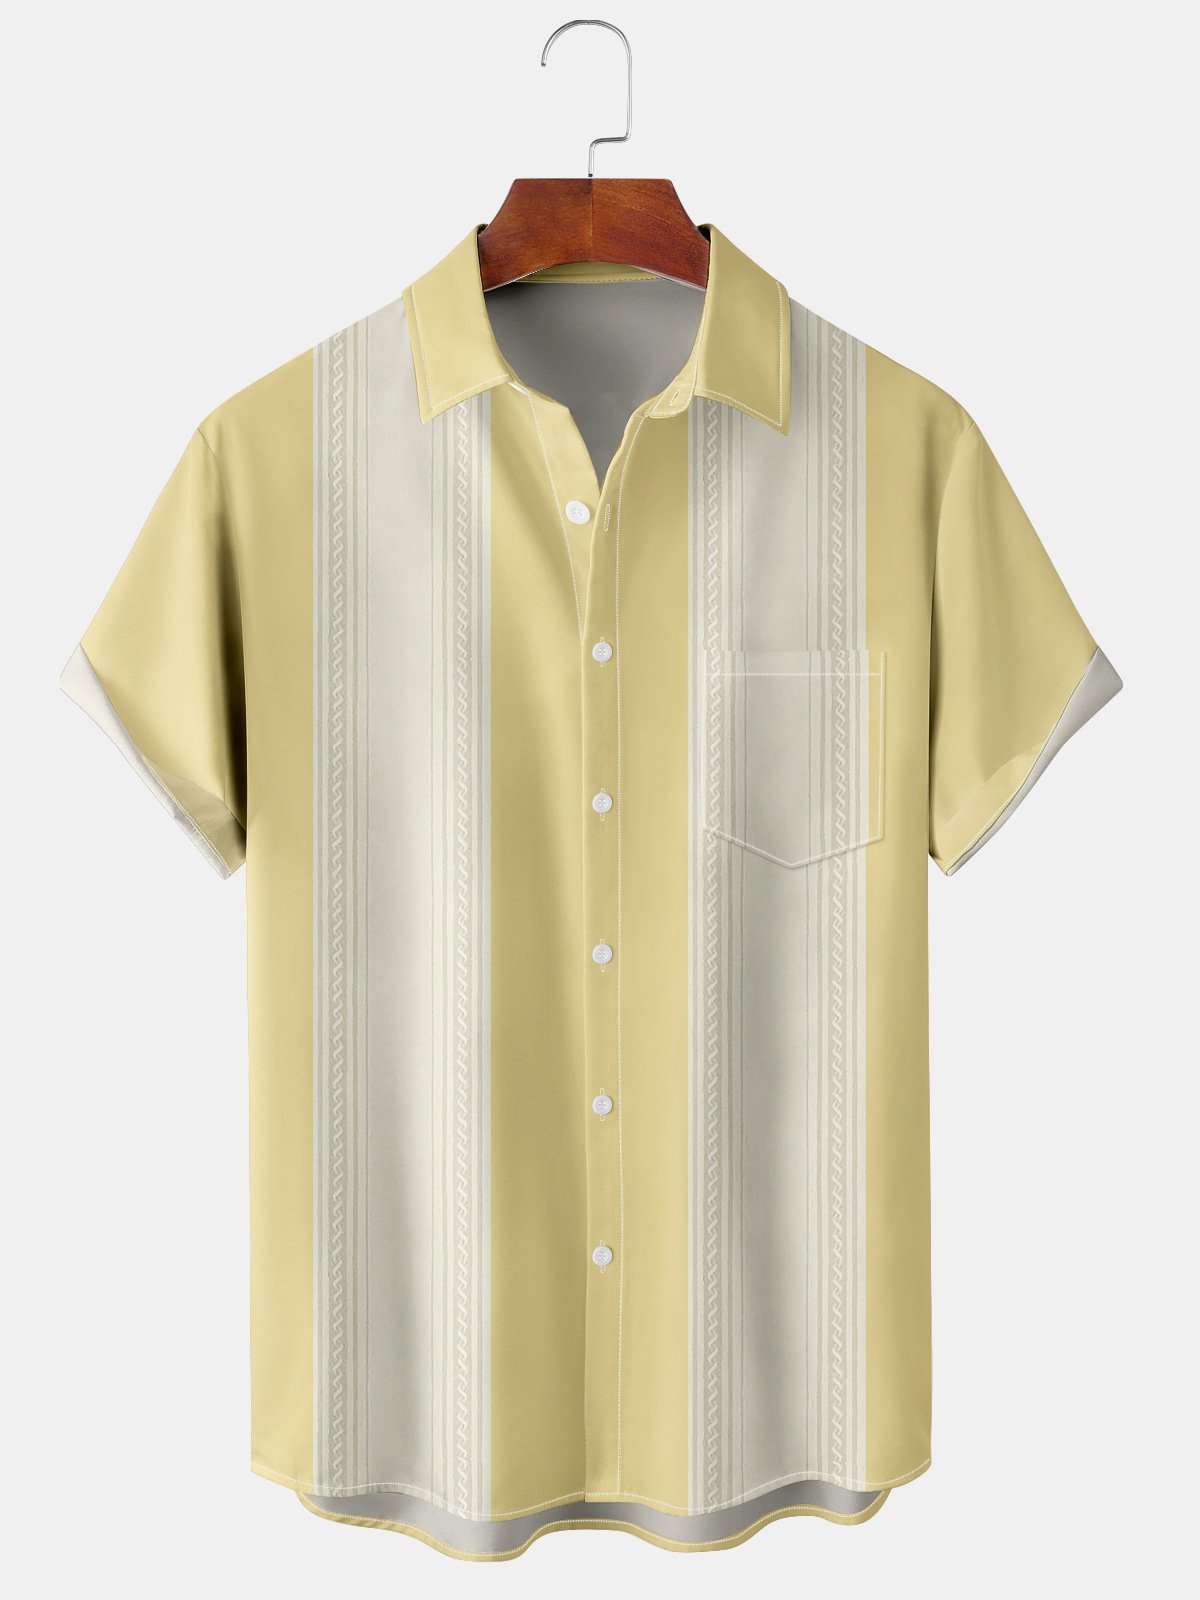 Mens Casual Art Collection Striped Short Sleeve Shirt Geometric Lapel Print Top